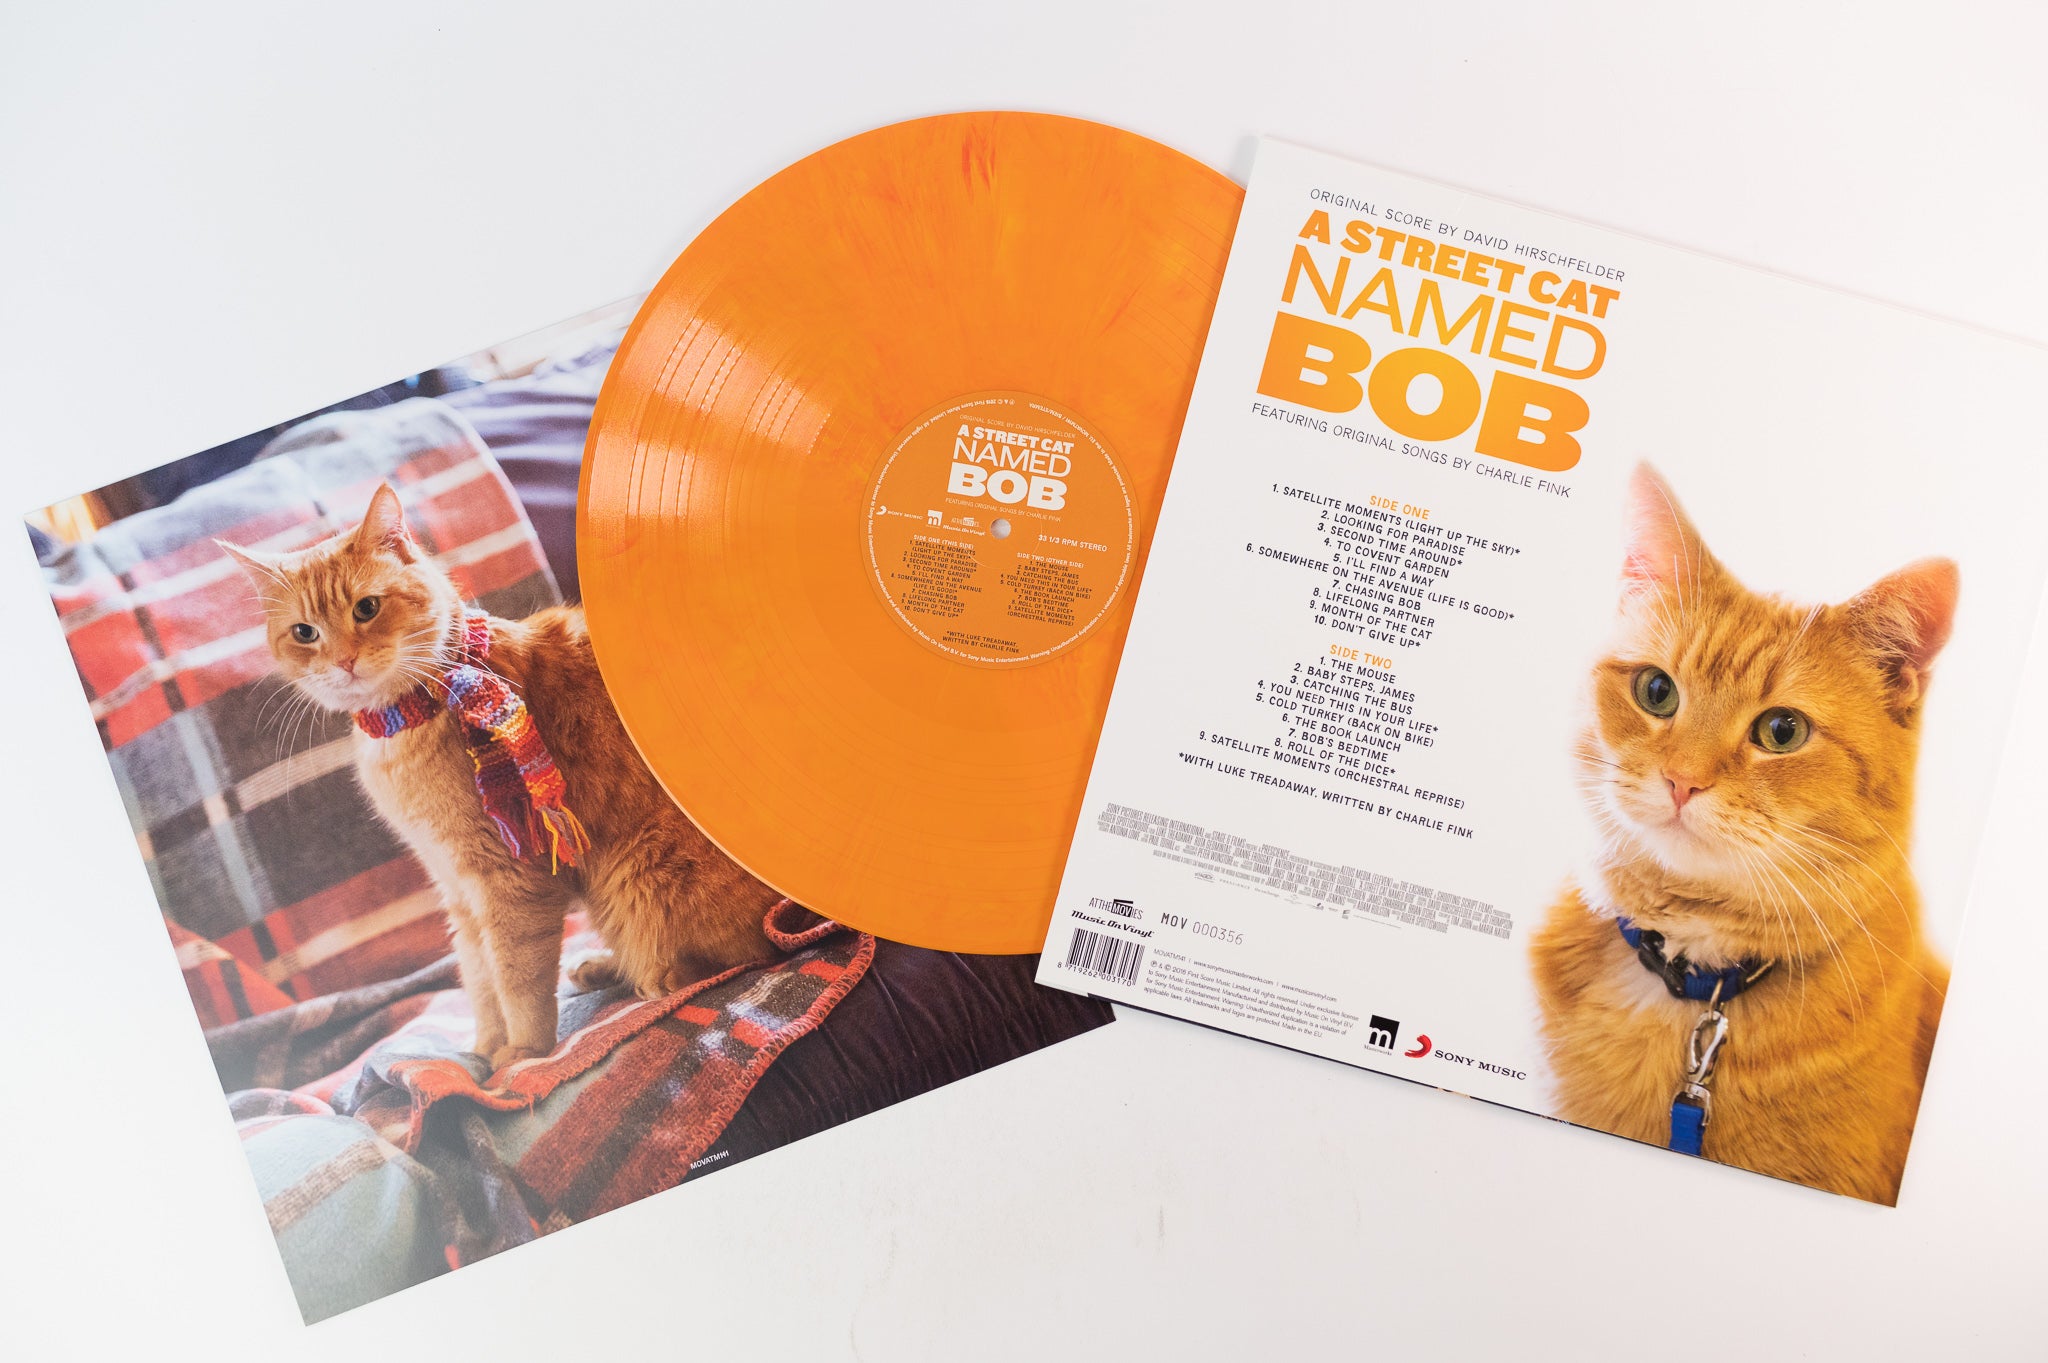 David Hirschfelder, Charlie Fink With Luke Treadaway - A Street Cat Named Bob (Soundtrack) on Music on Vinyl Limited Numbered Orange Vinyl